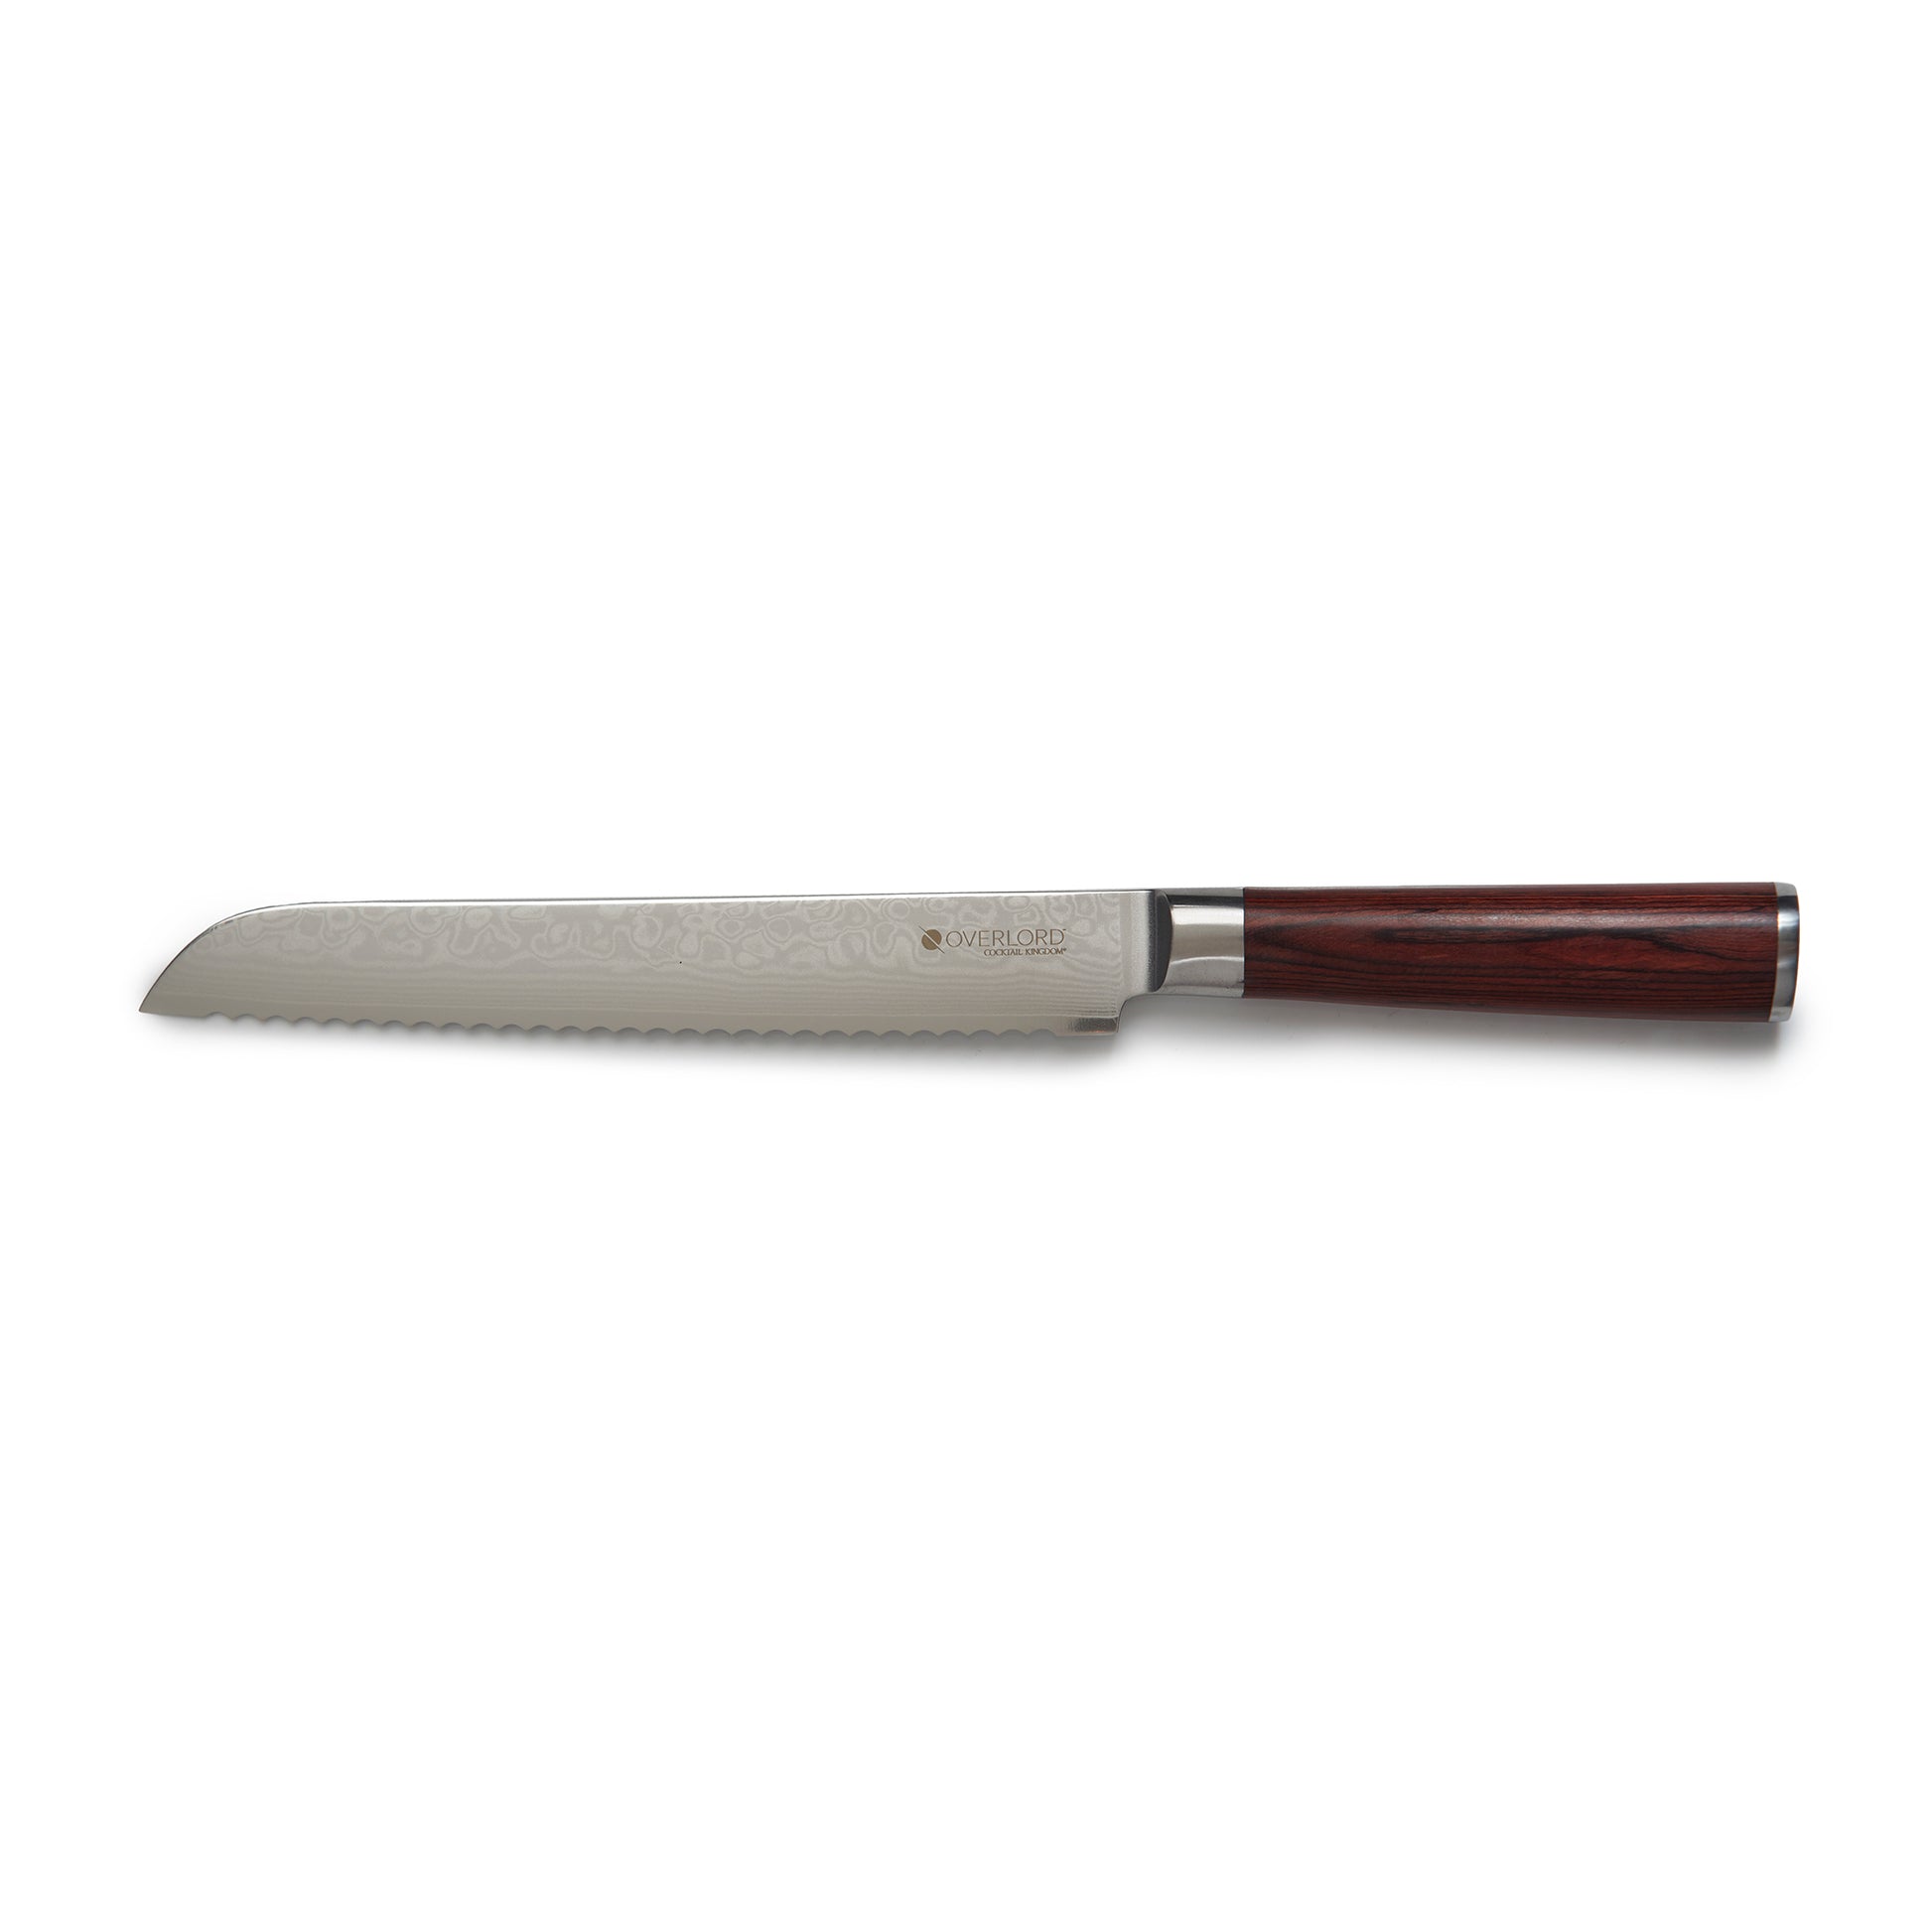 OVERLORD™ 8” SERRATED KNIFE – PAKKAWOOD HANDLE